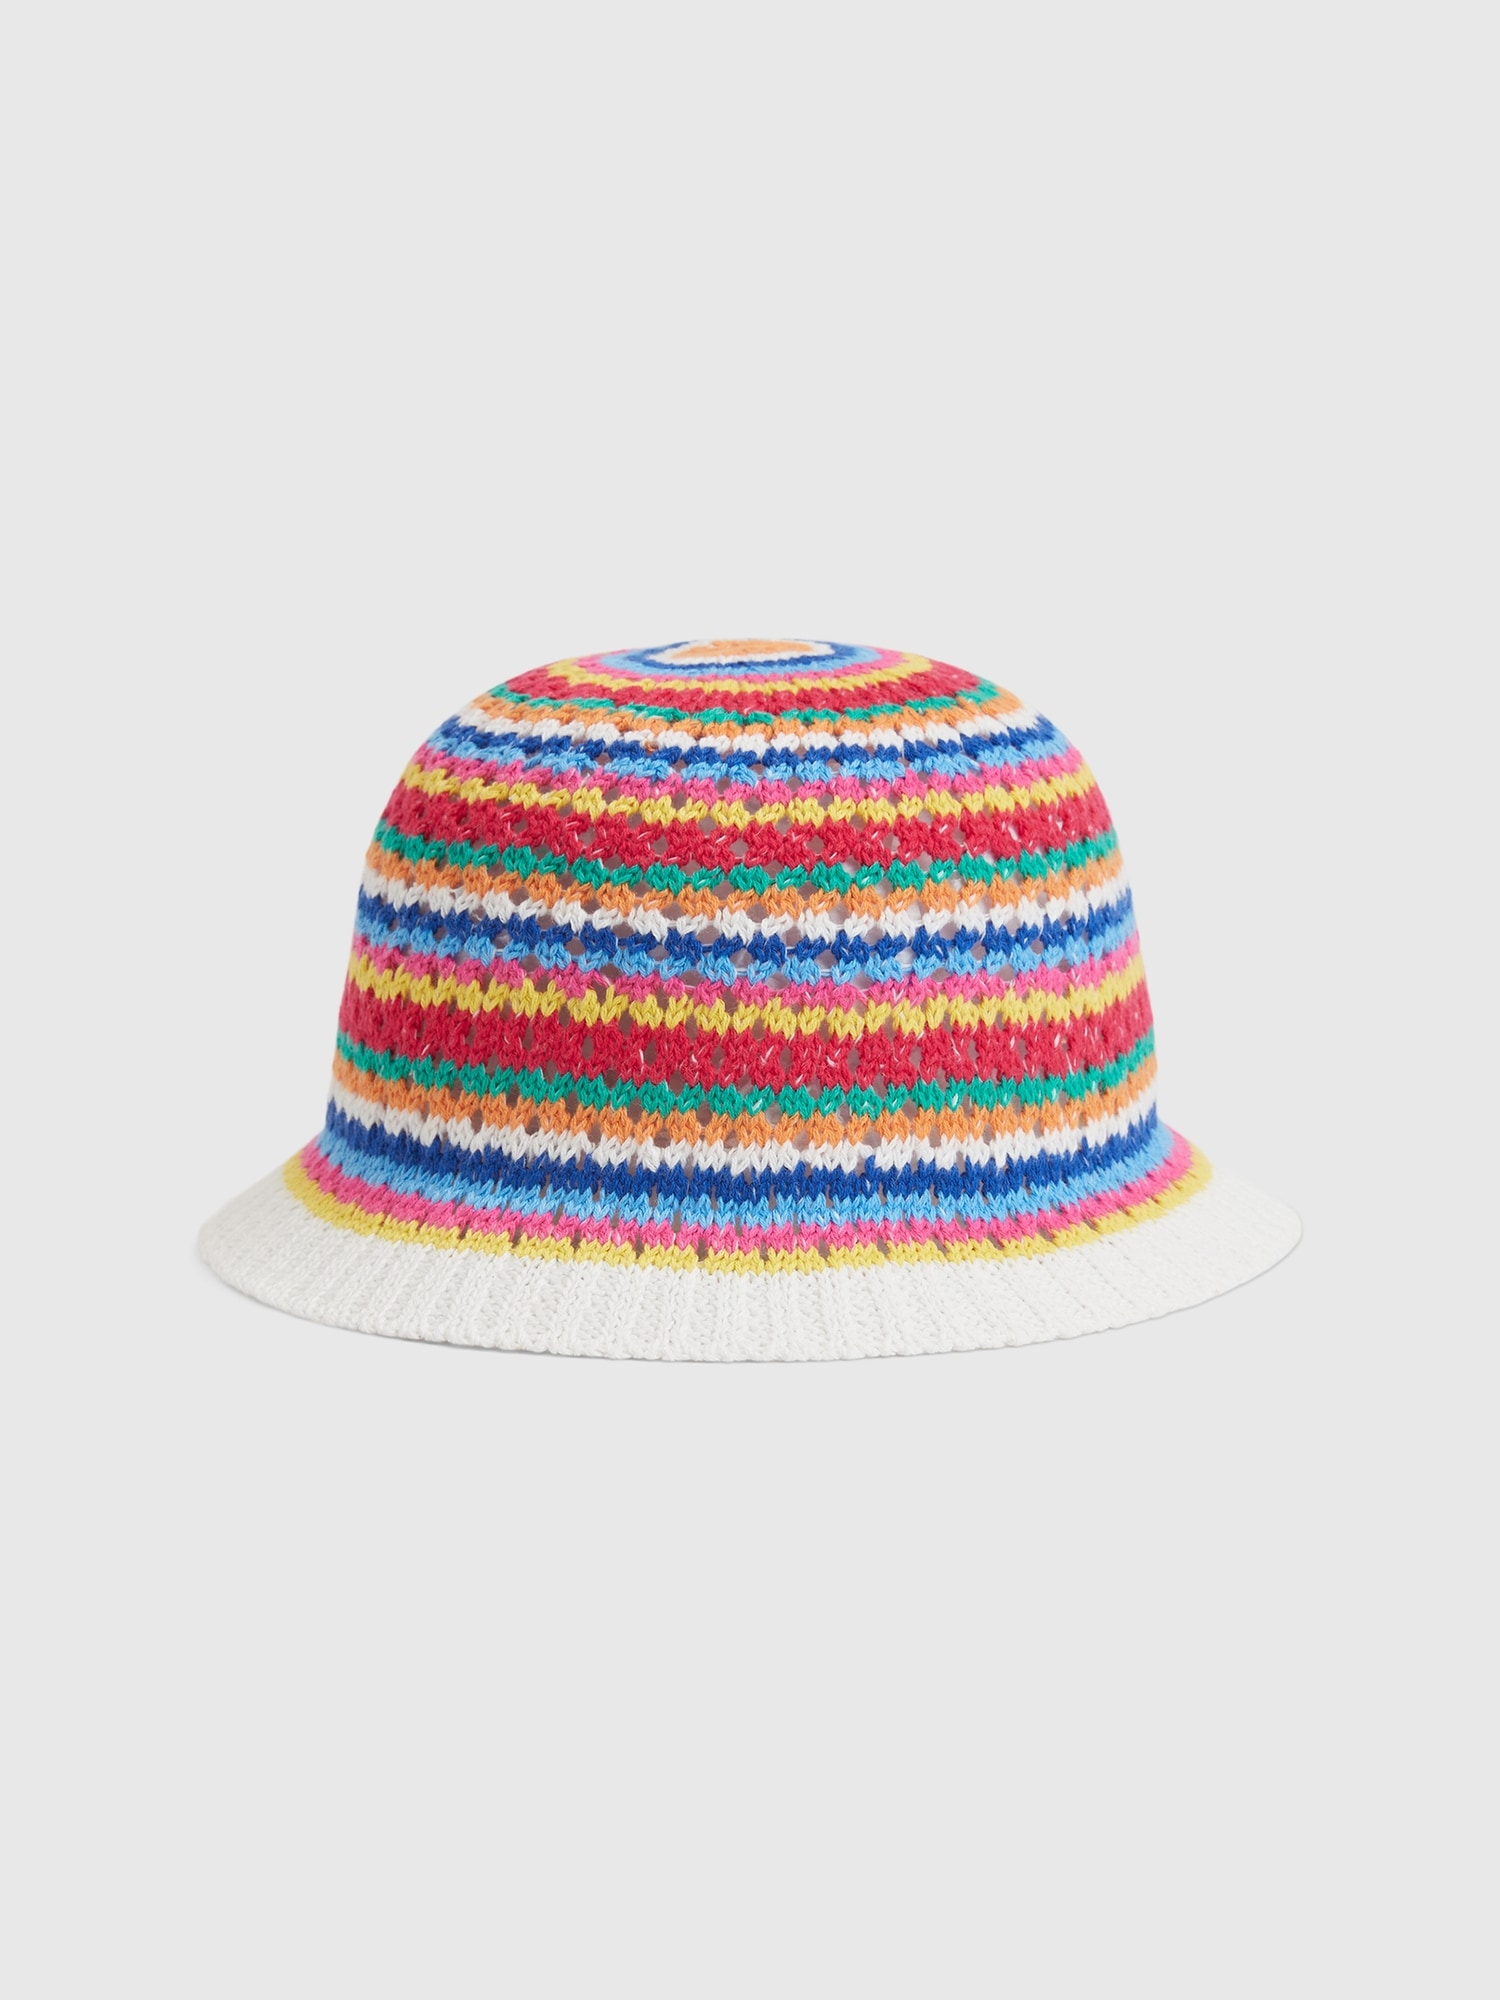 Gap Babies' Toddler Crochet Bucket Hat In Multi